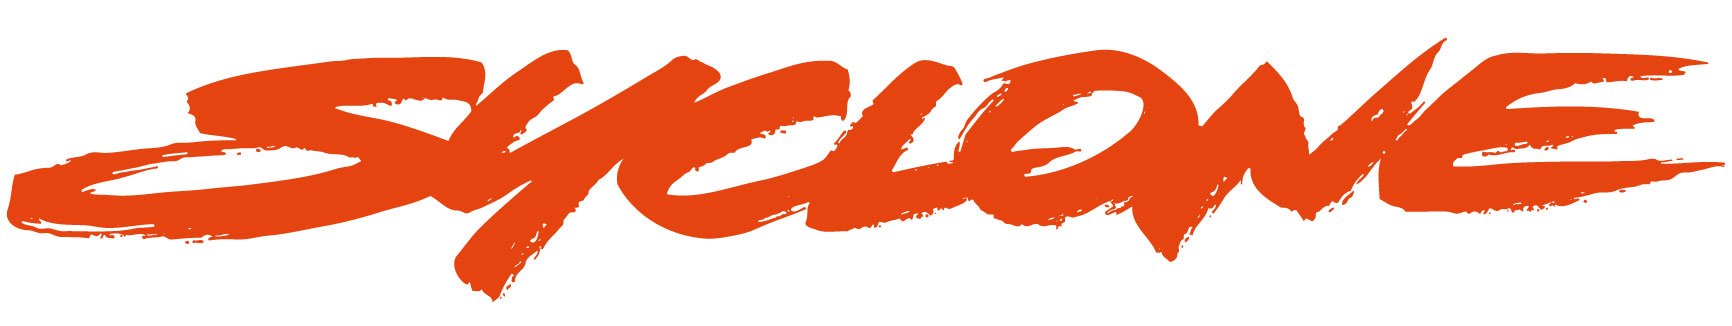 Syclone Logo photo - 1